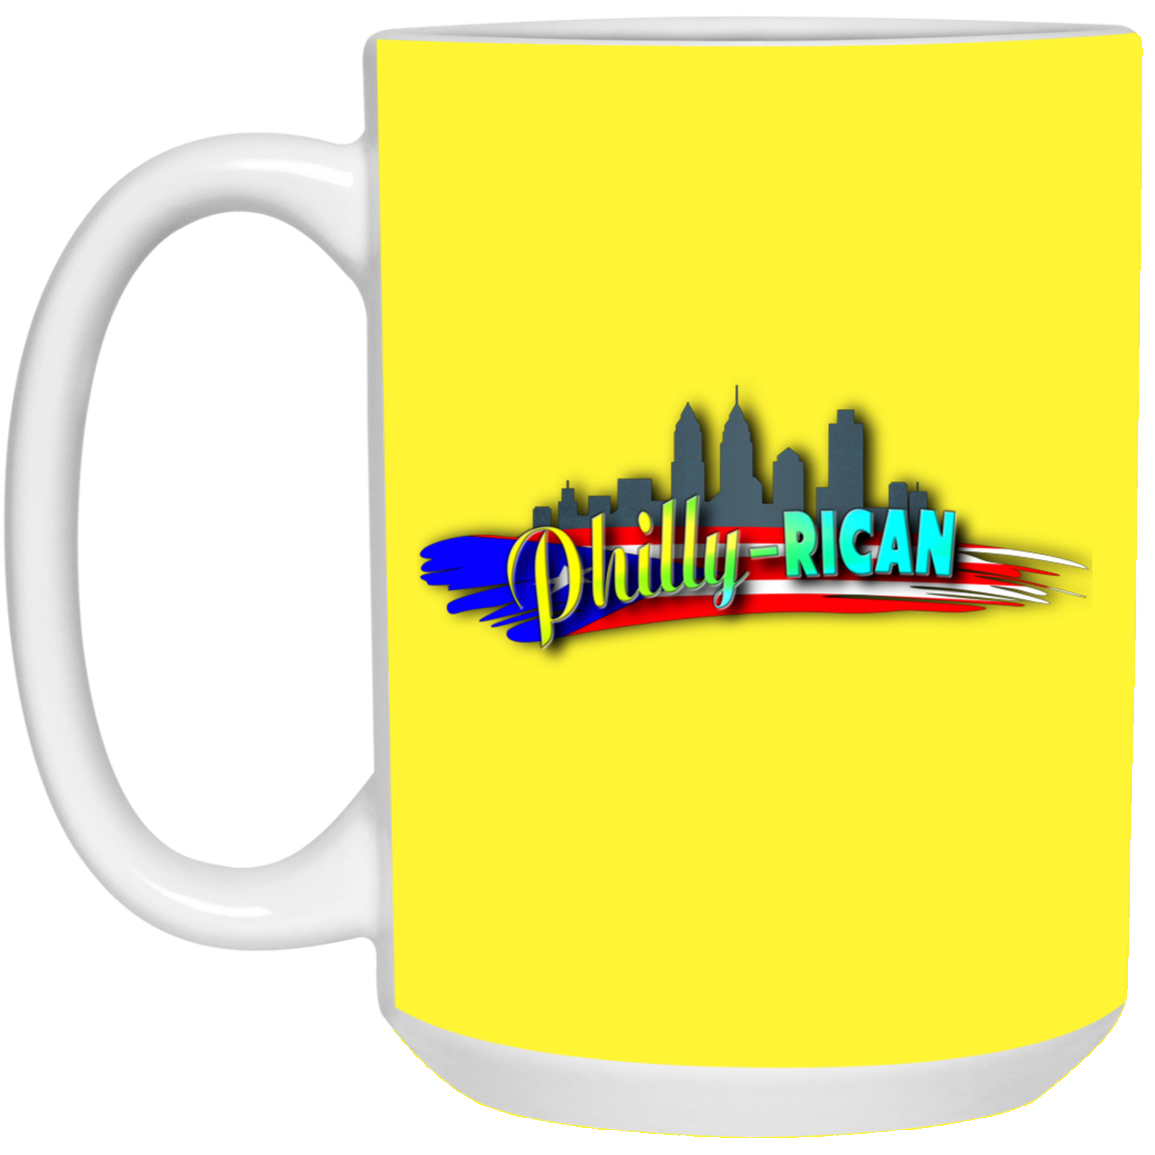 Philly-Rican 15 oz. White Mug - Puerto Rican Pride